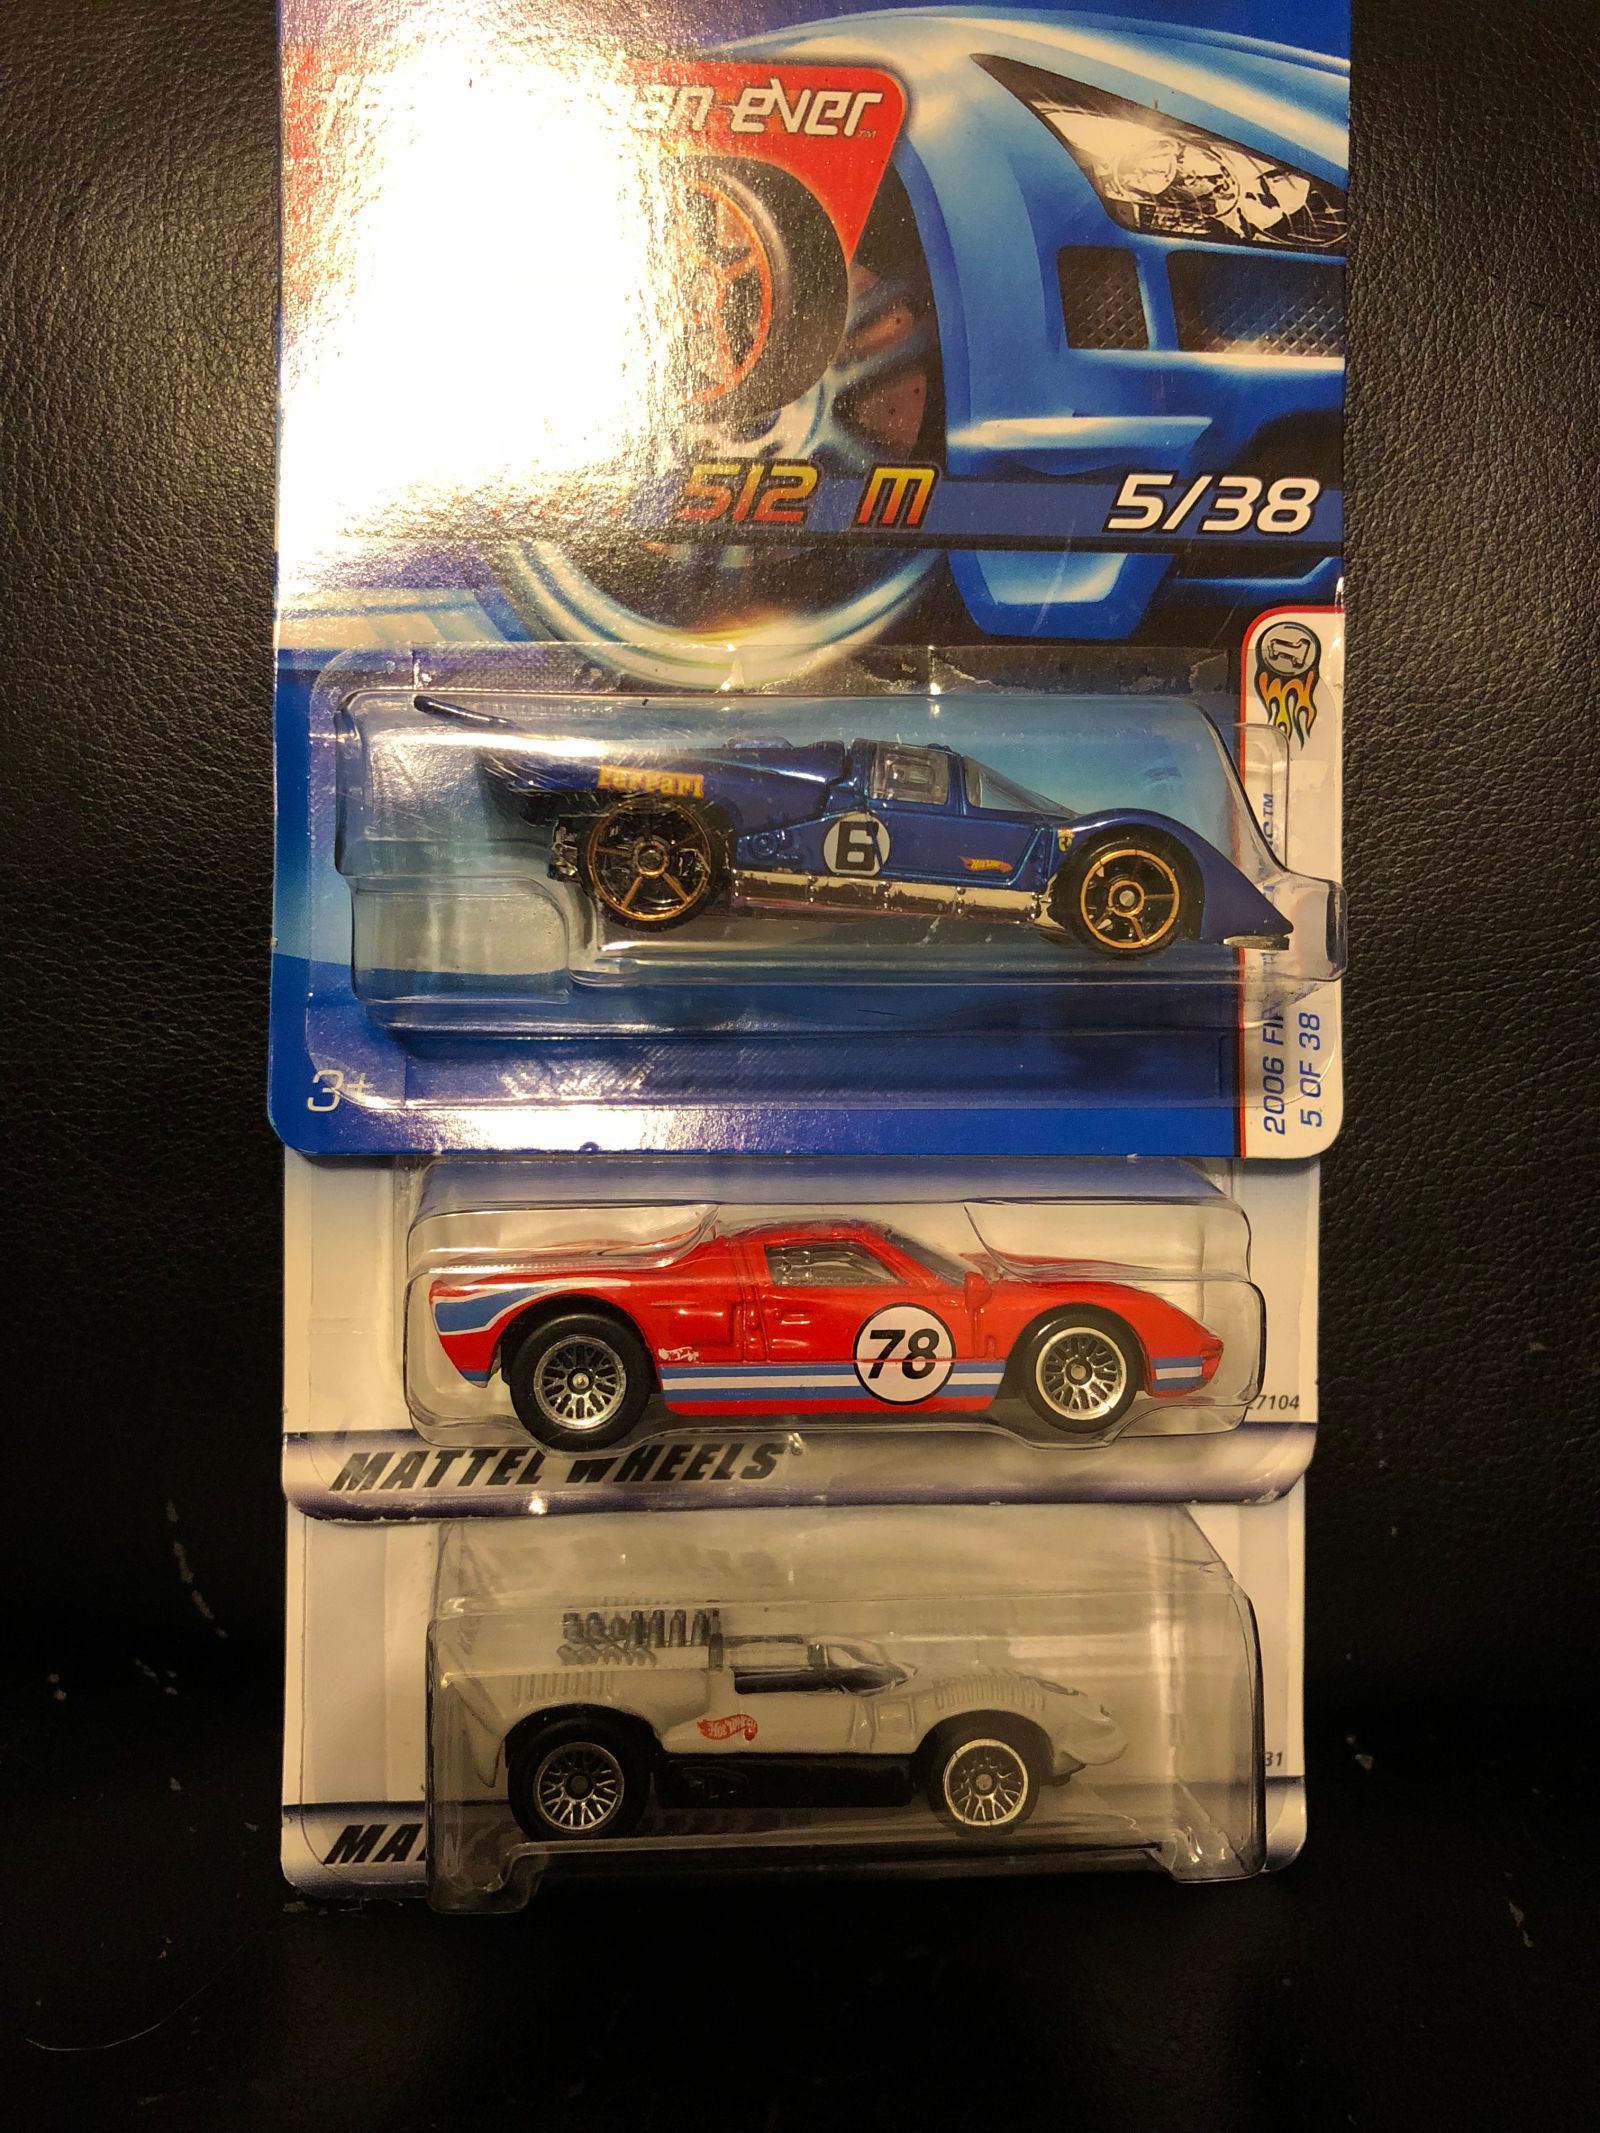 Chaparral, GT40 and Ferrari 512 m